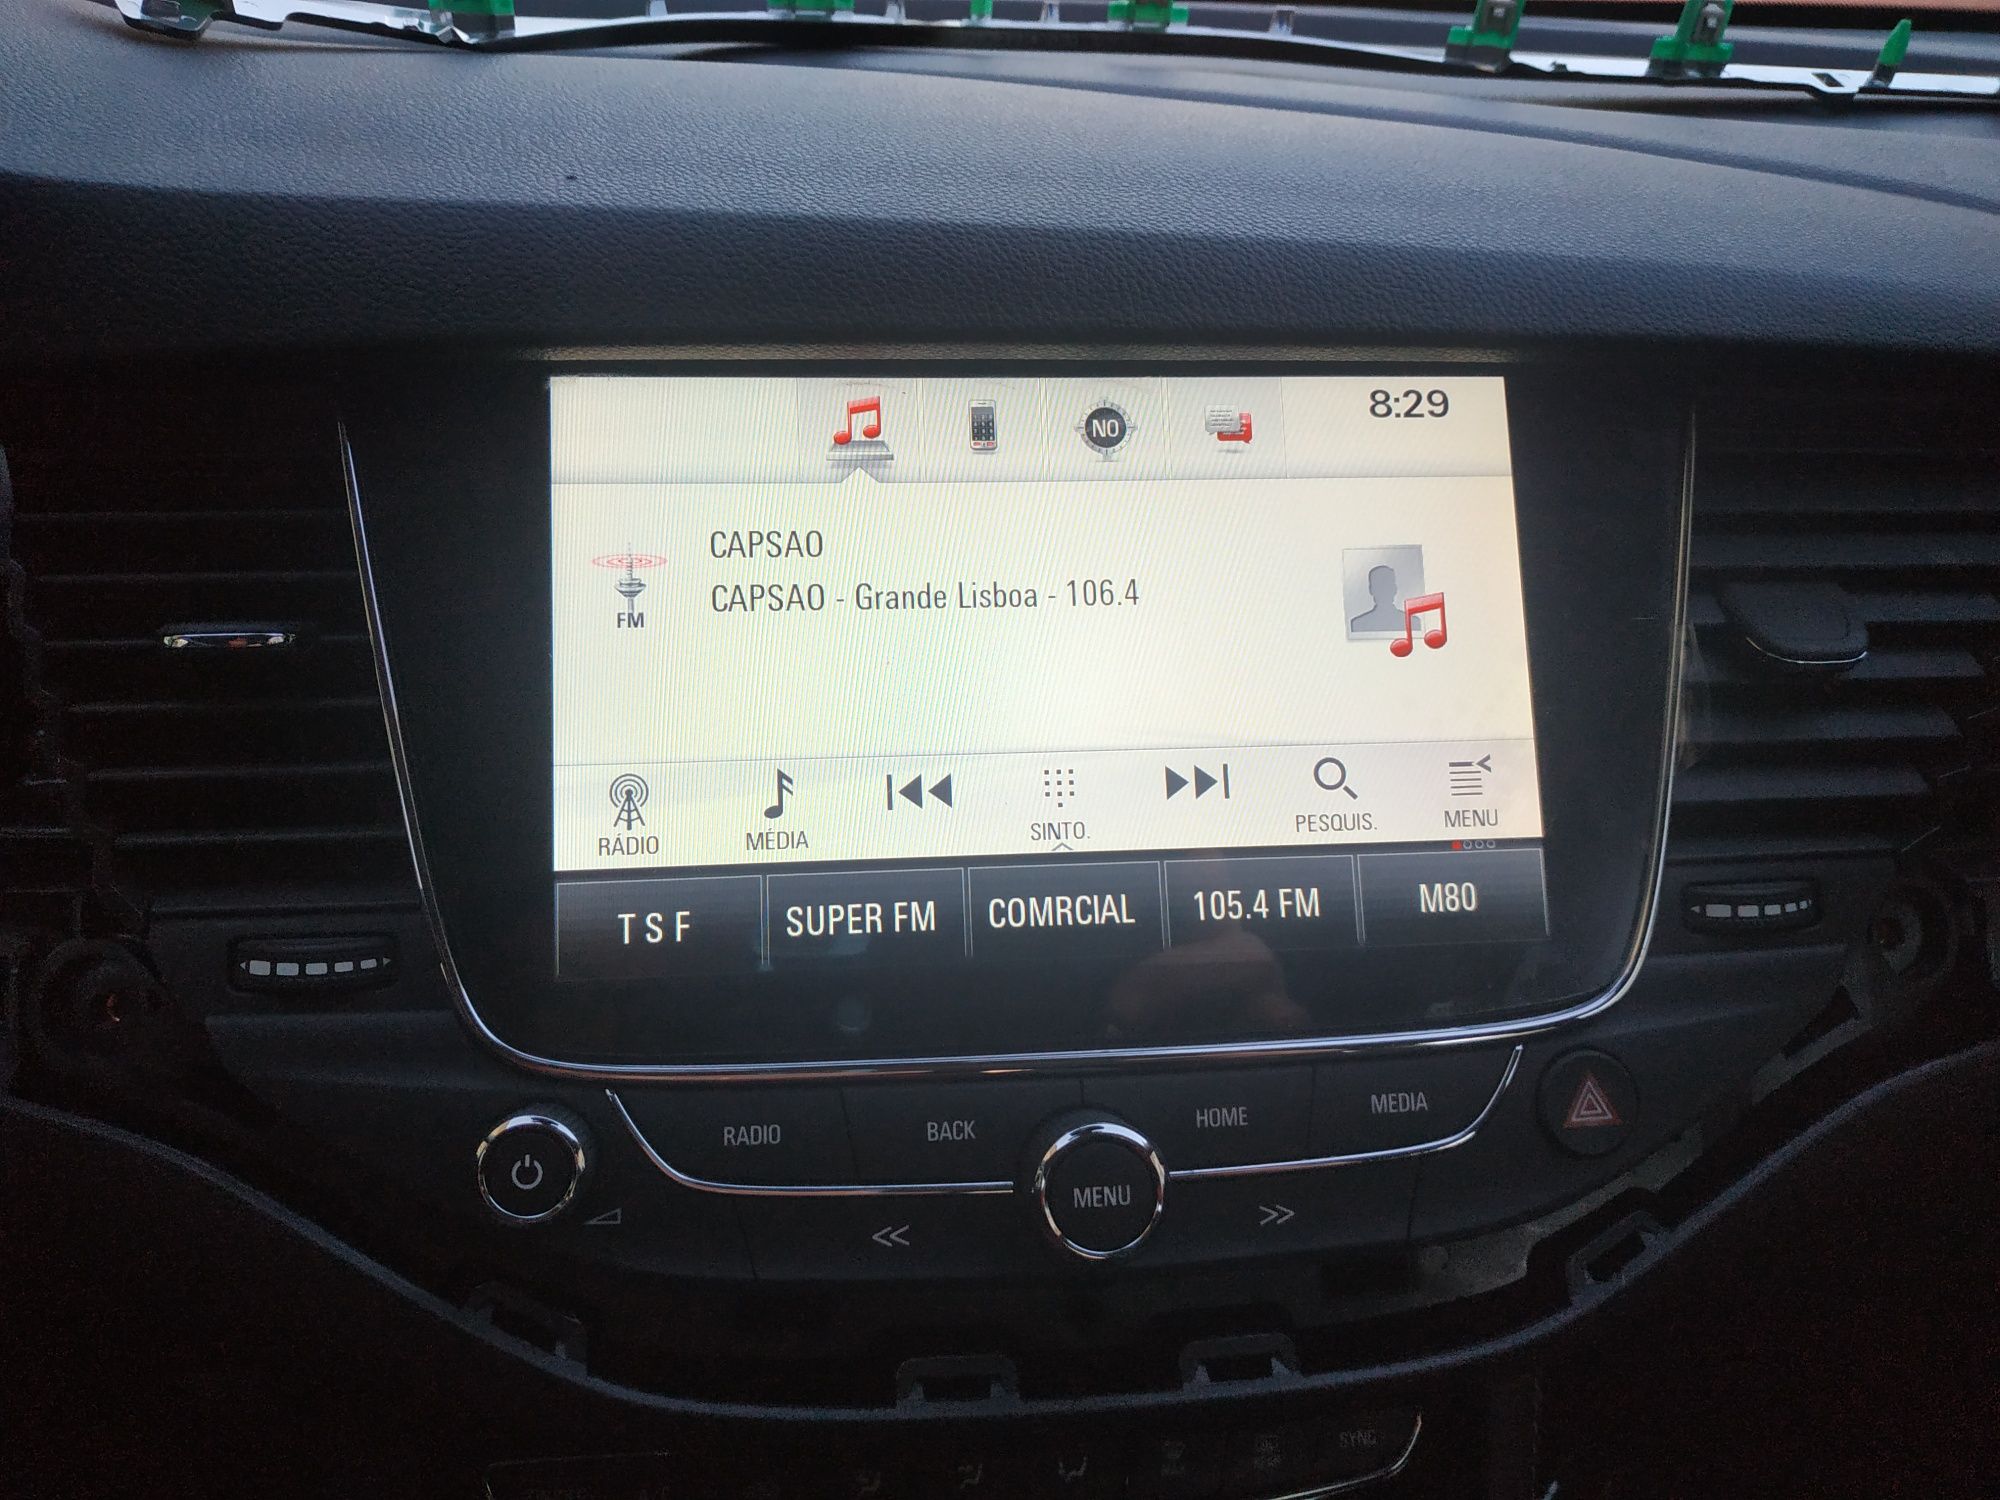 Display Radio Opel Astra k